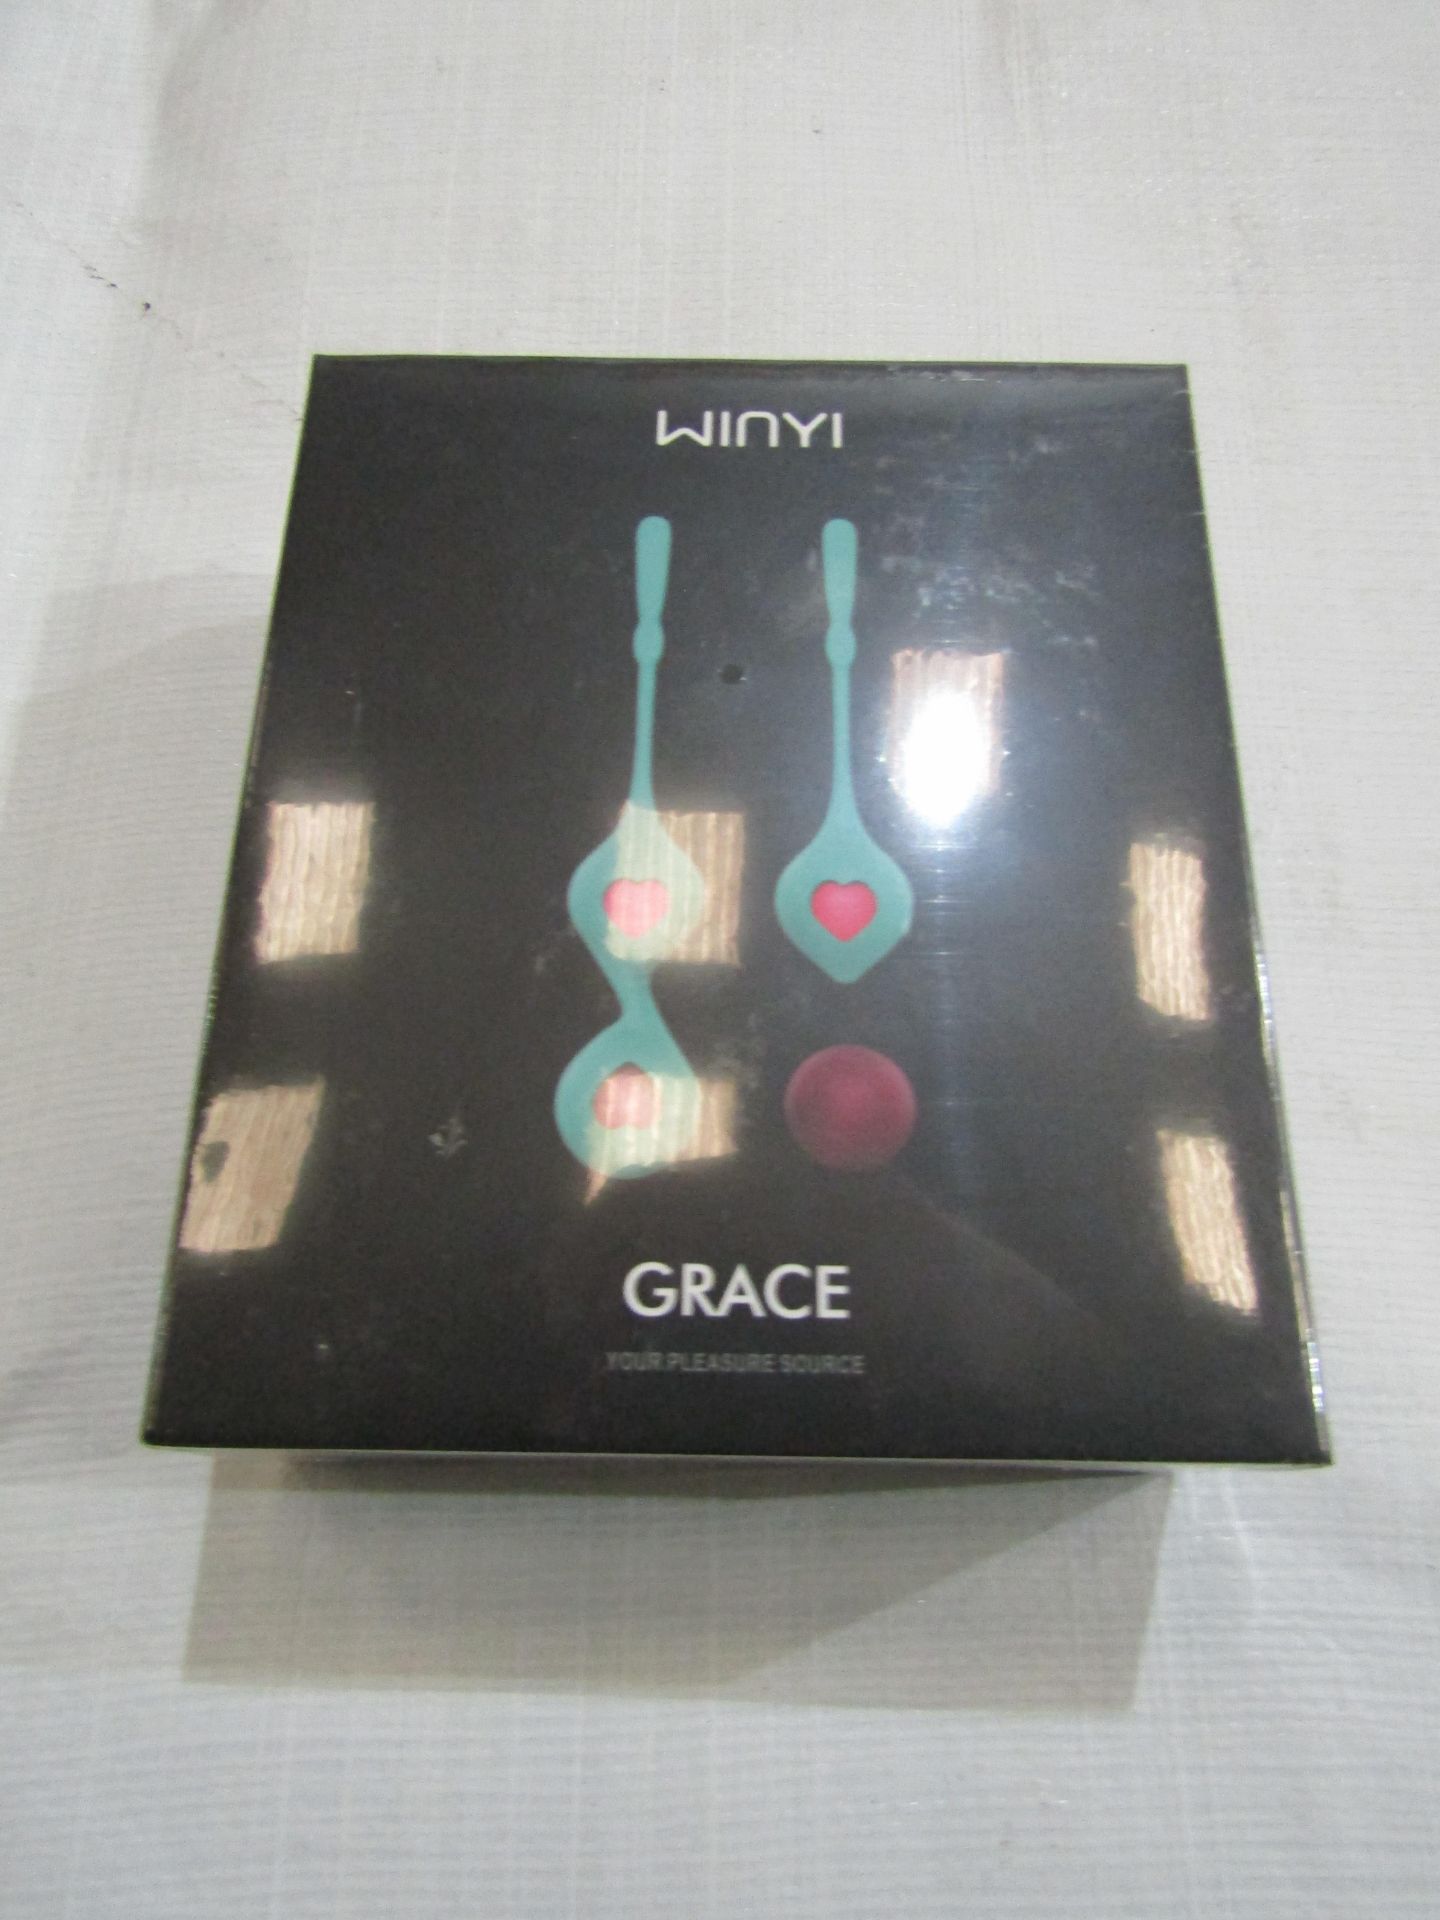 WINYI Grace Soft Silicone Ergonomic Pelvic Floor Trainer - New & Packaged.